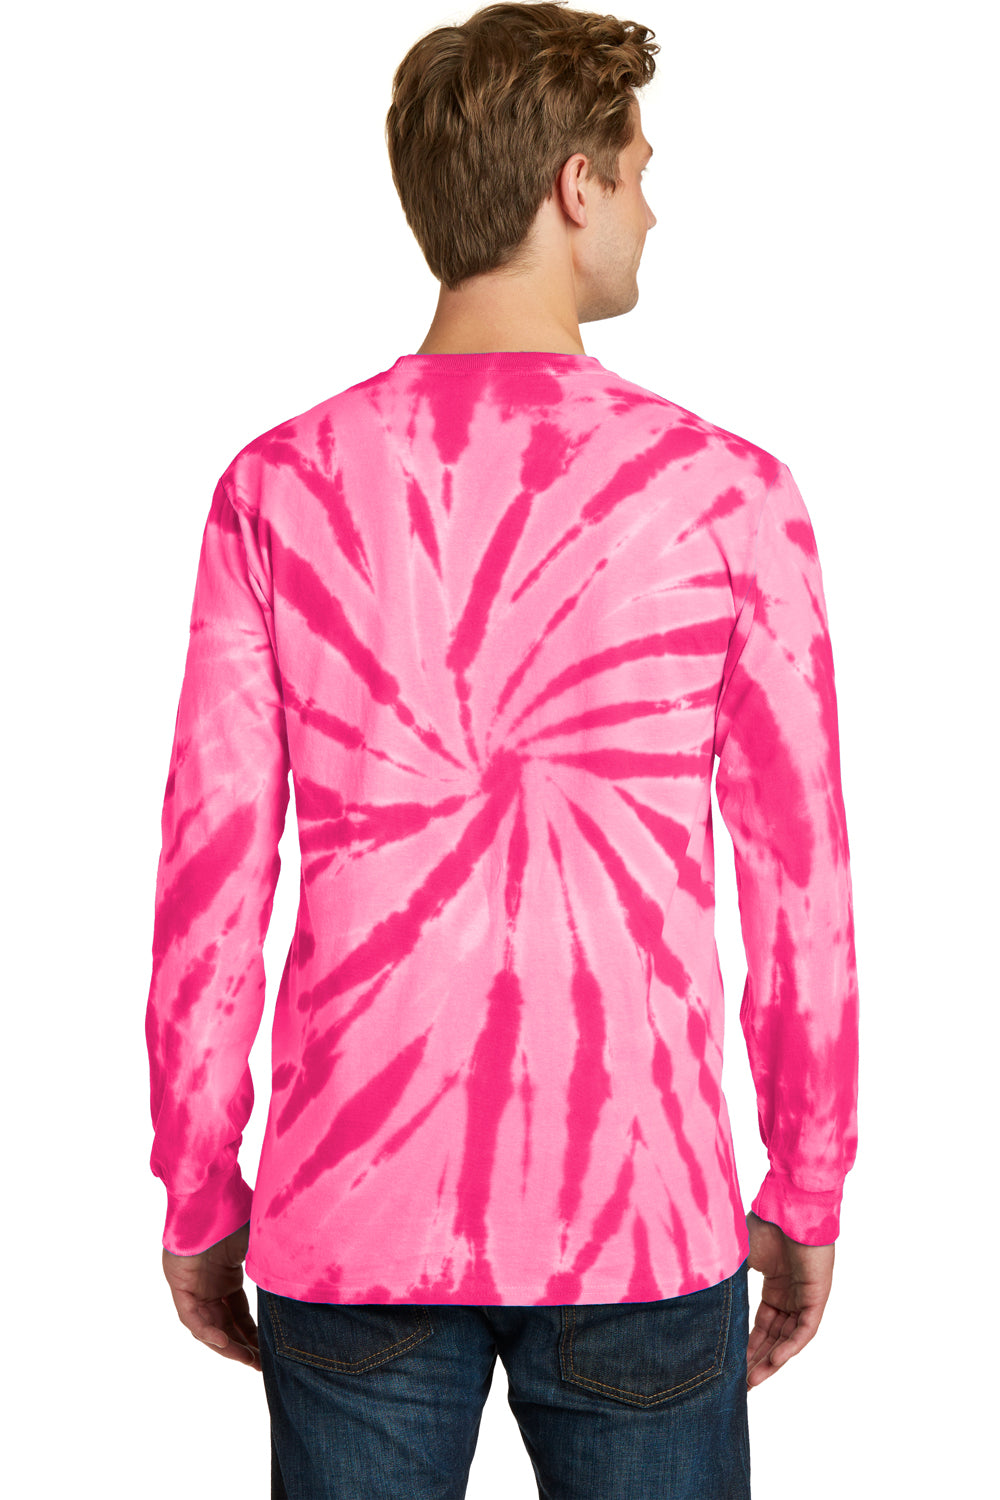 Port & Company PC147LS Mens Tie-Dye Long Sleeve Crewneck T-Shirt Pink Back